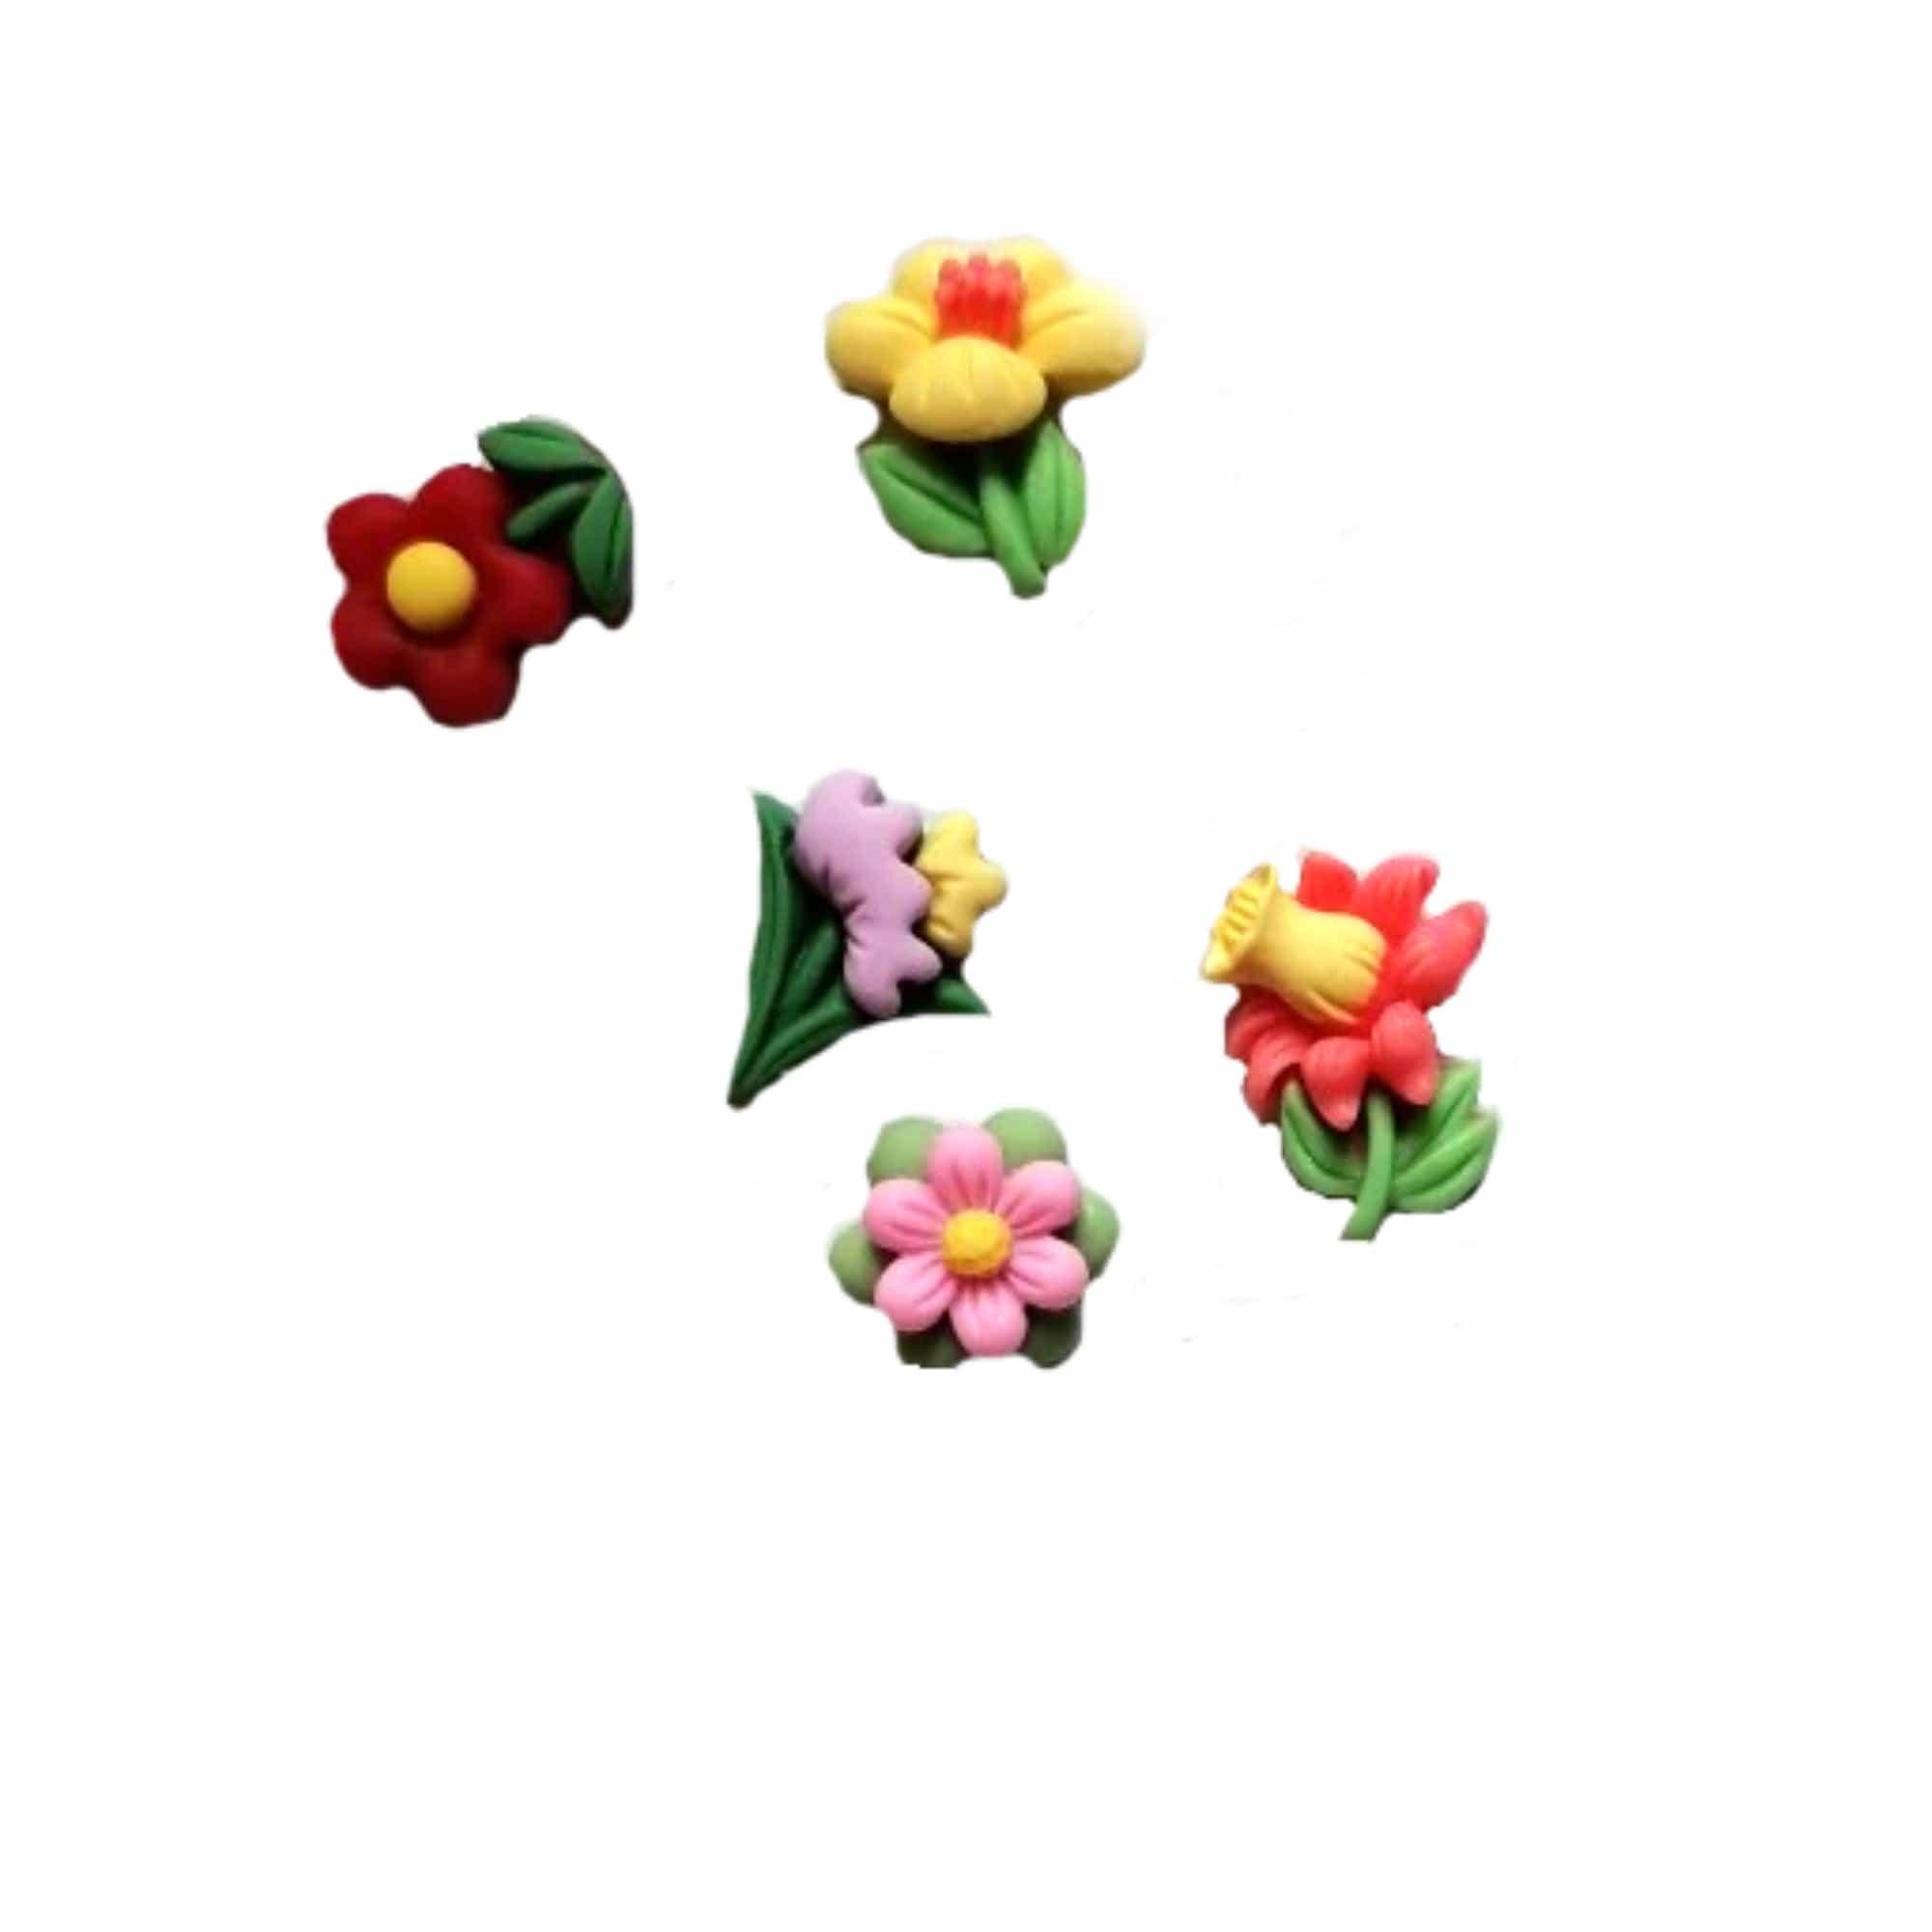 Flower Fun Collection .5" Flower Variety Flatback Scrapbook Buttons by SSC Designs - Pkg. of 5